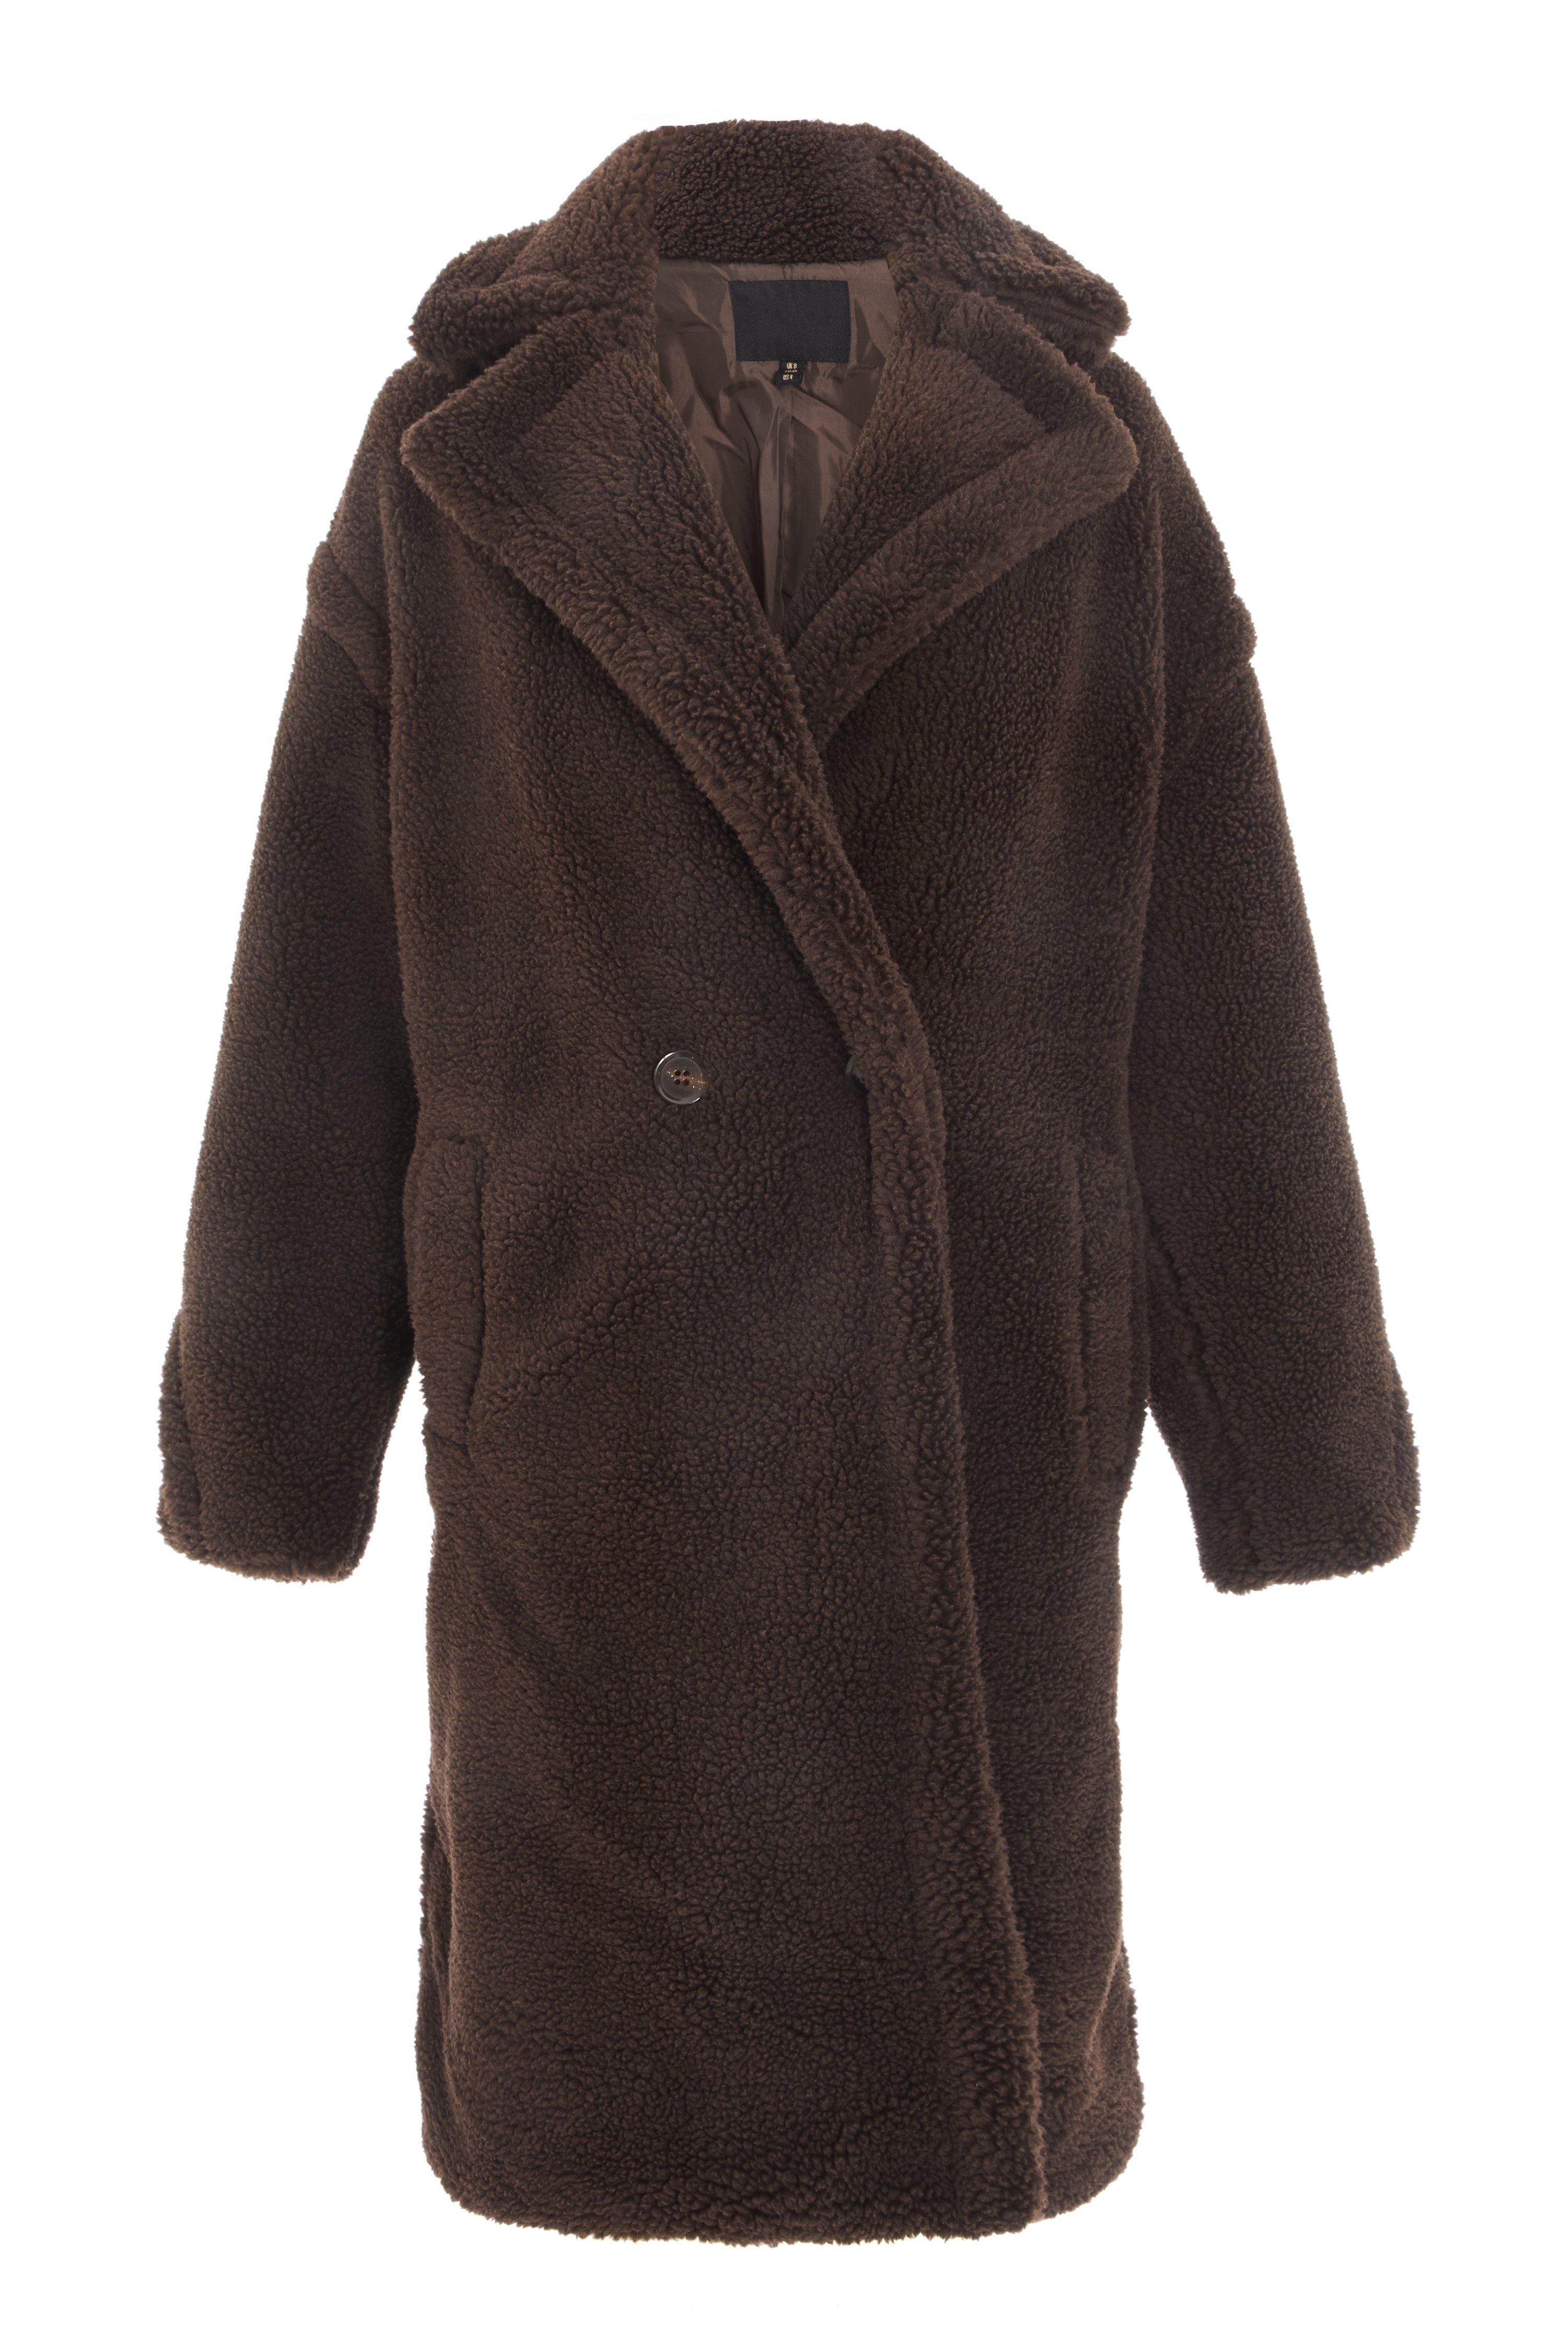 Brown Oversized Teddy Bear Coat - Quiz Clothing